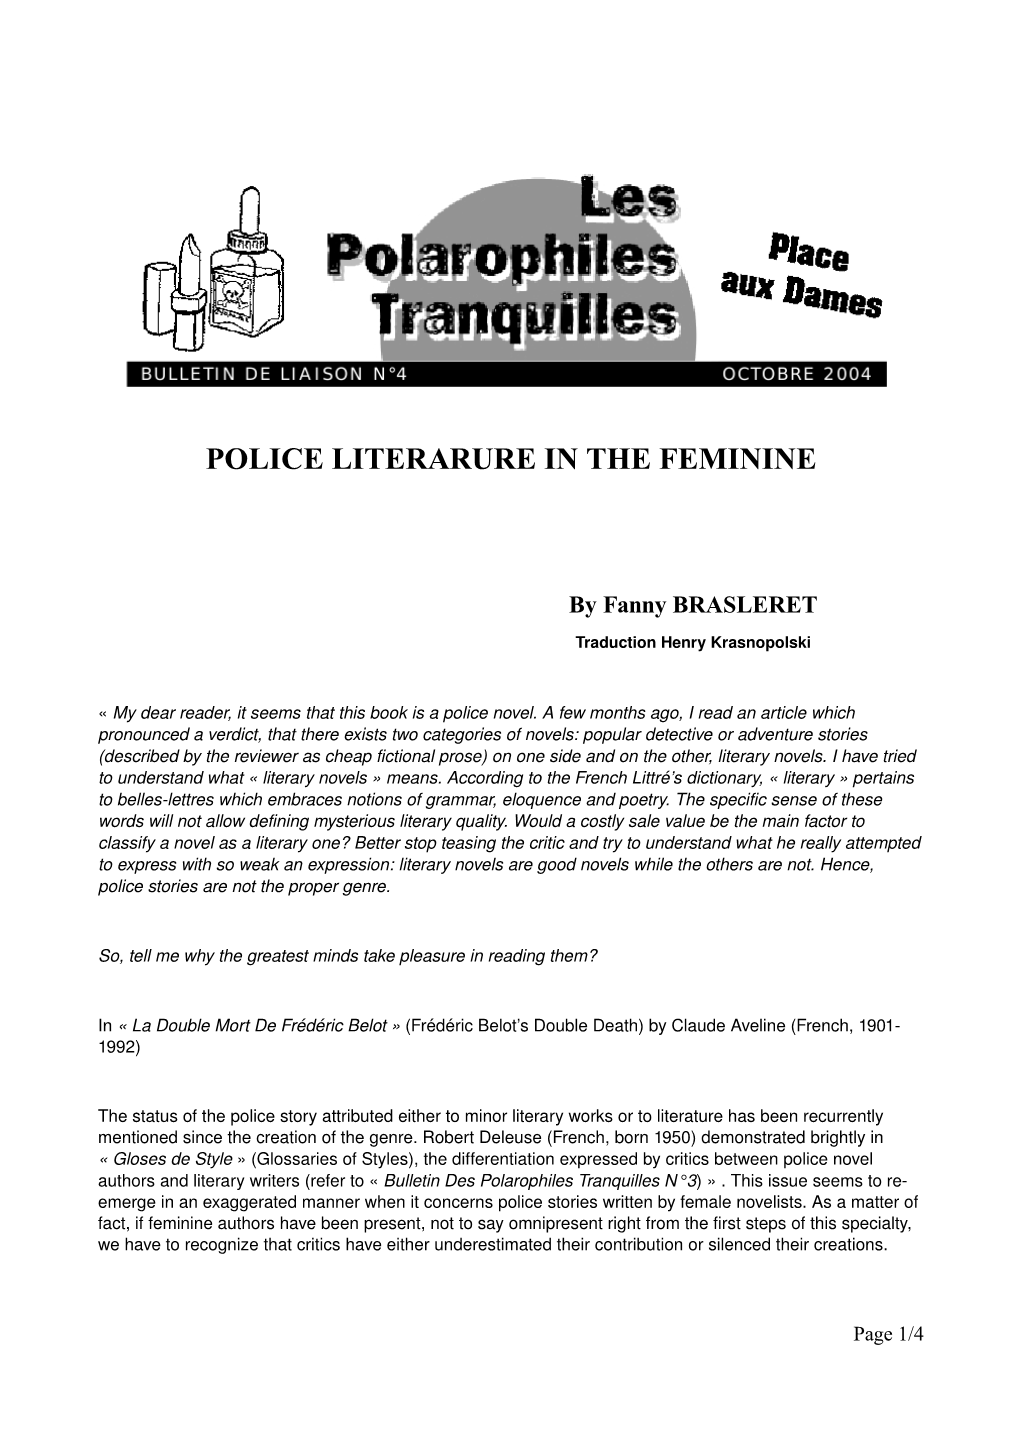 Police Literarure in the Feminine